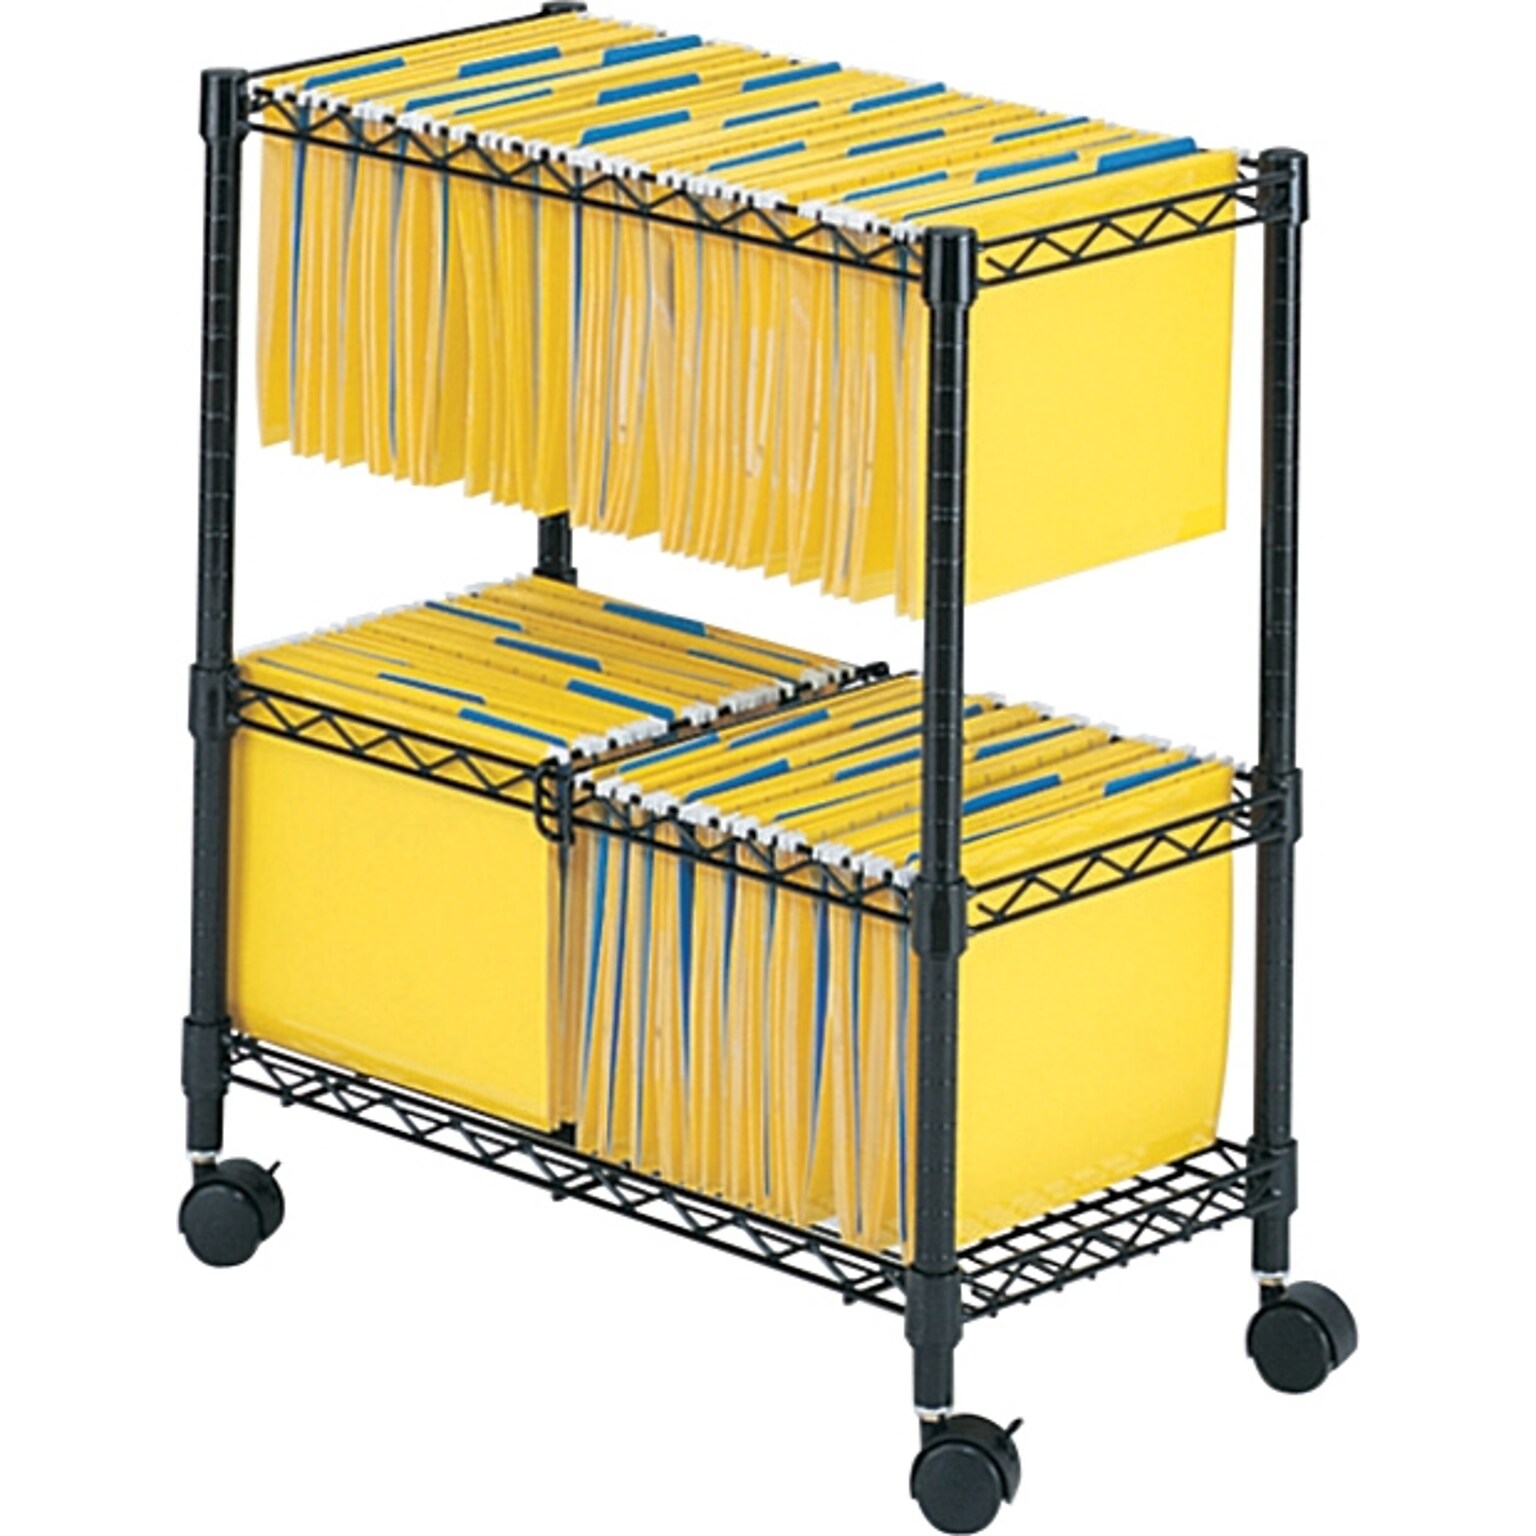 Safco 2-Shelf Metal Mobile File Cart with Swivel Wheels, Black (5278BL)